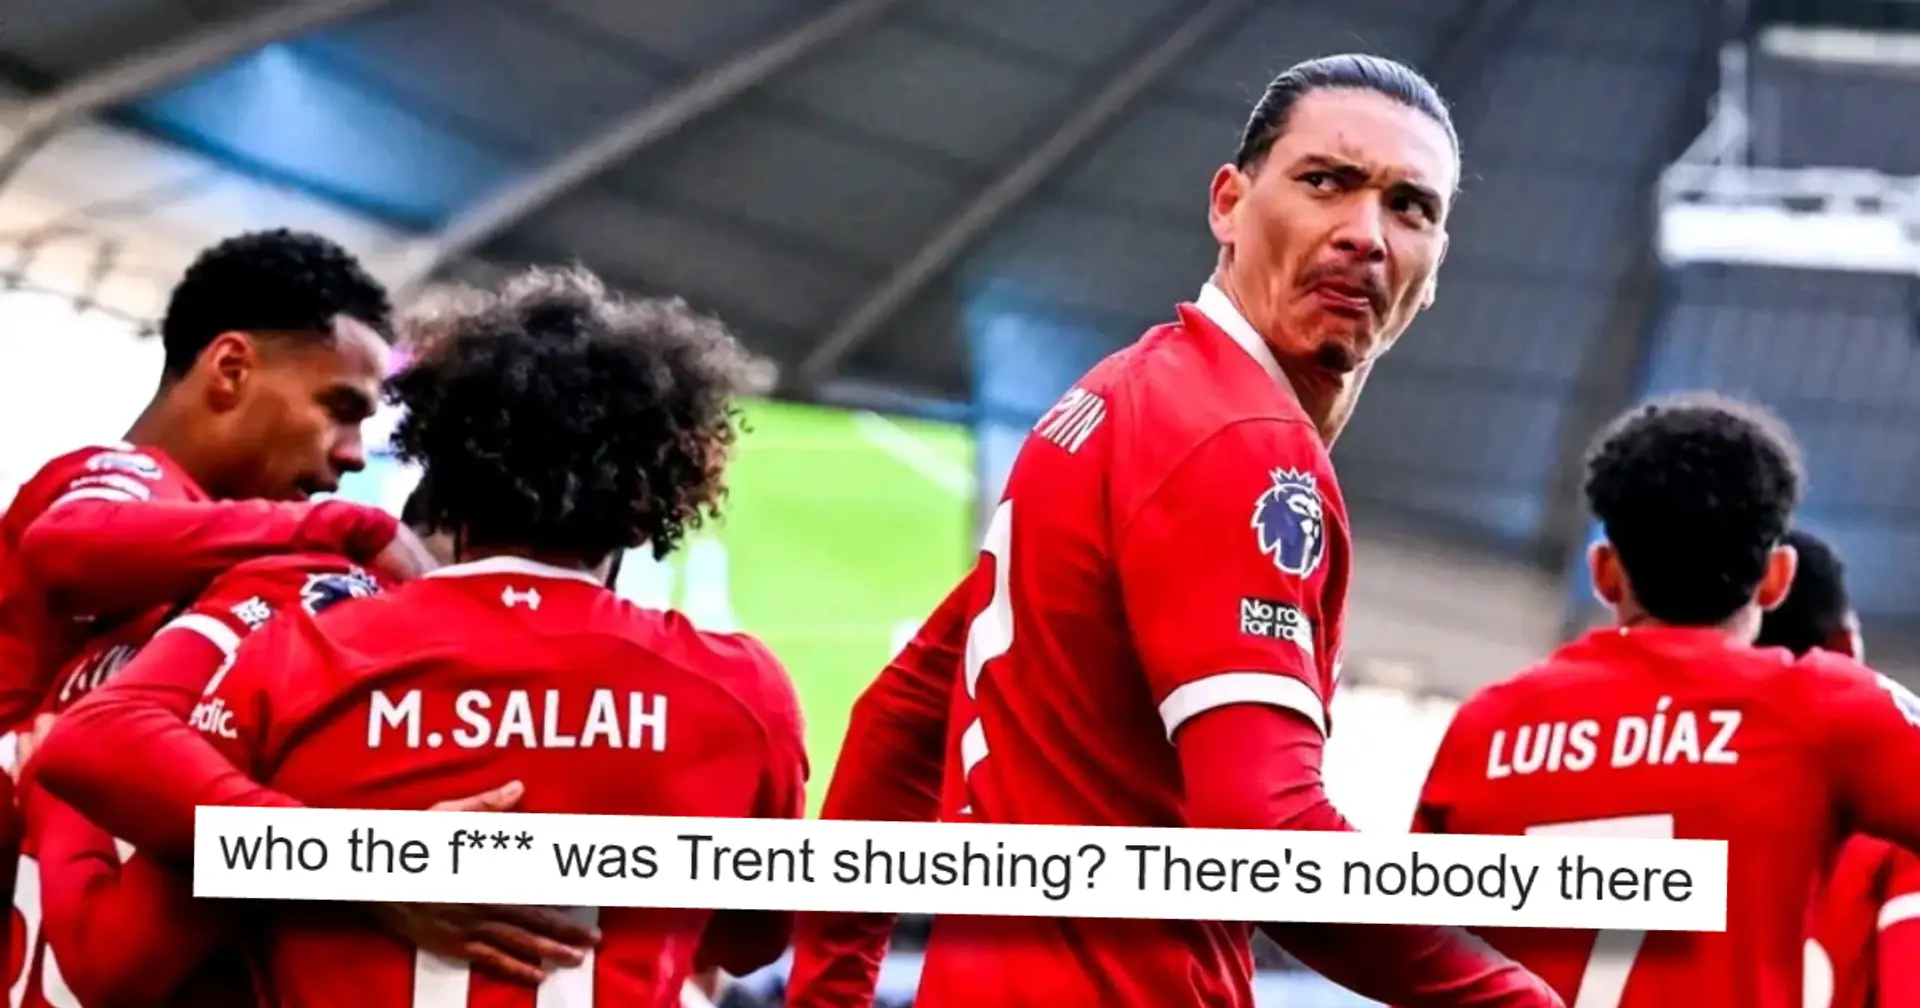 Darwin Nunez pulls a face at City fans after Trent's goal, immediately becomes a meme